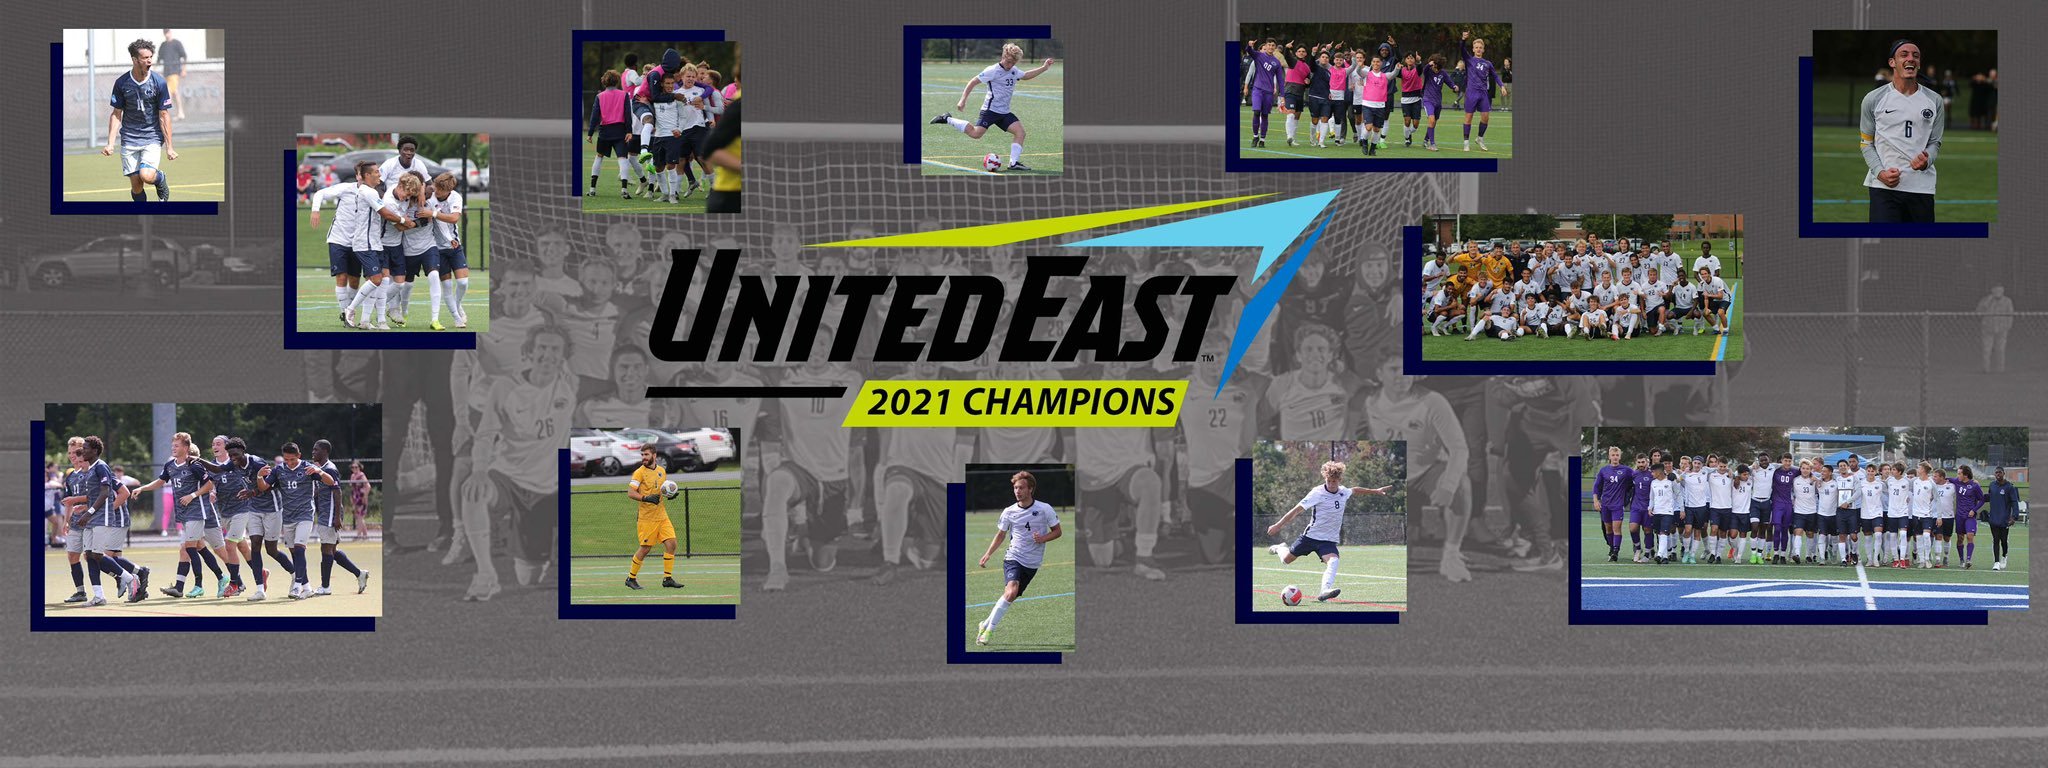 2021 United East Championship Graphic .jpg